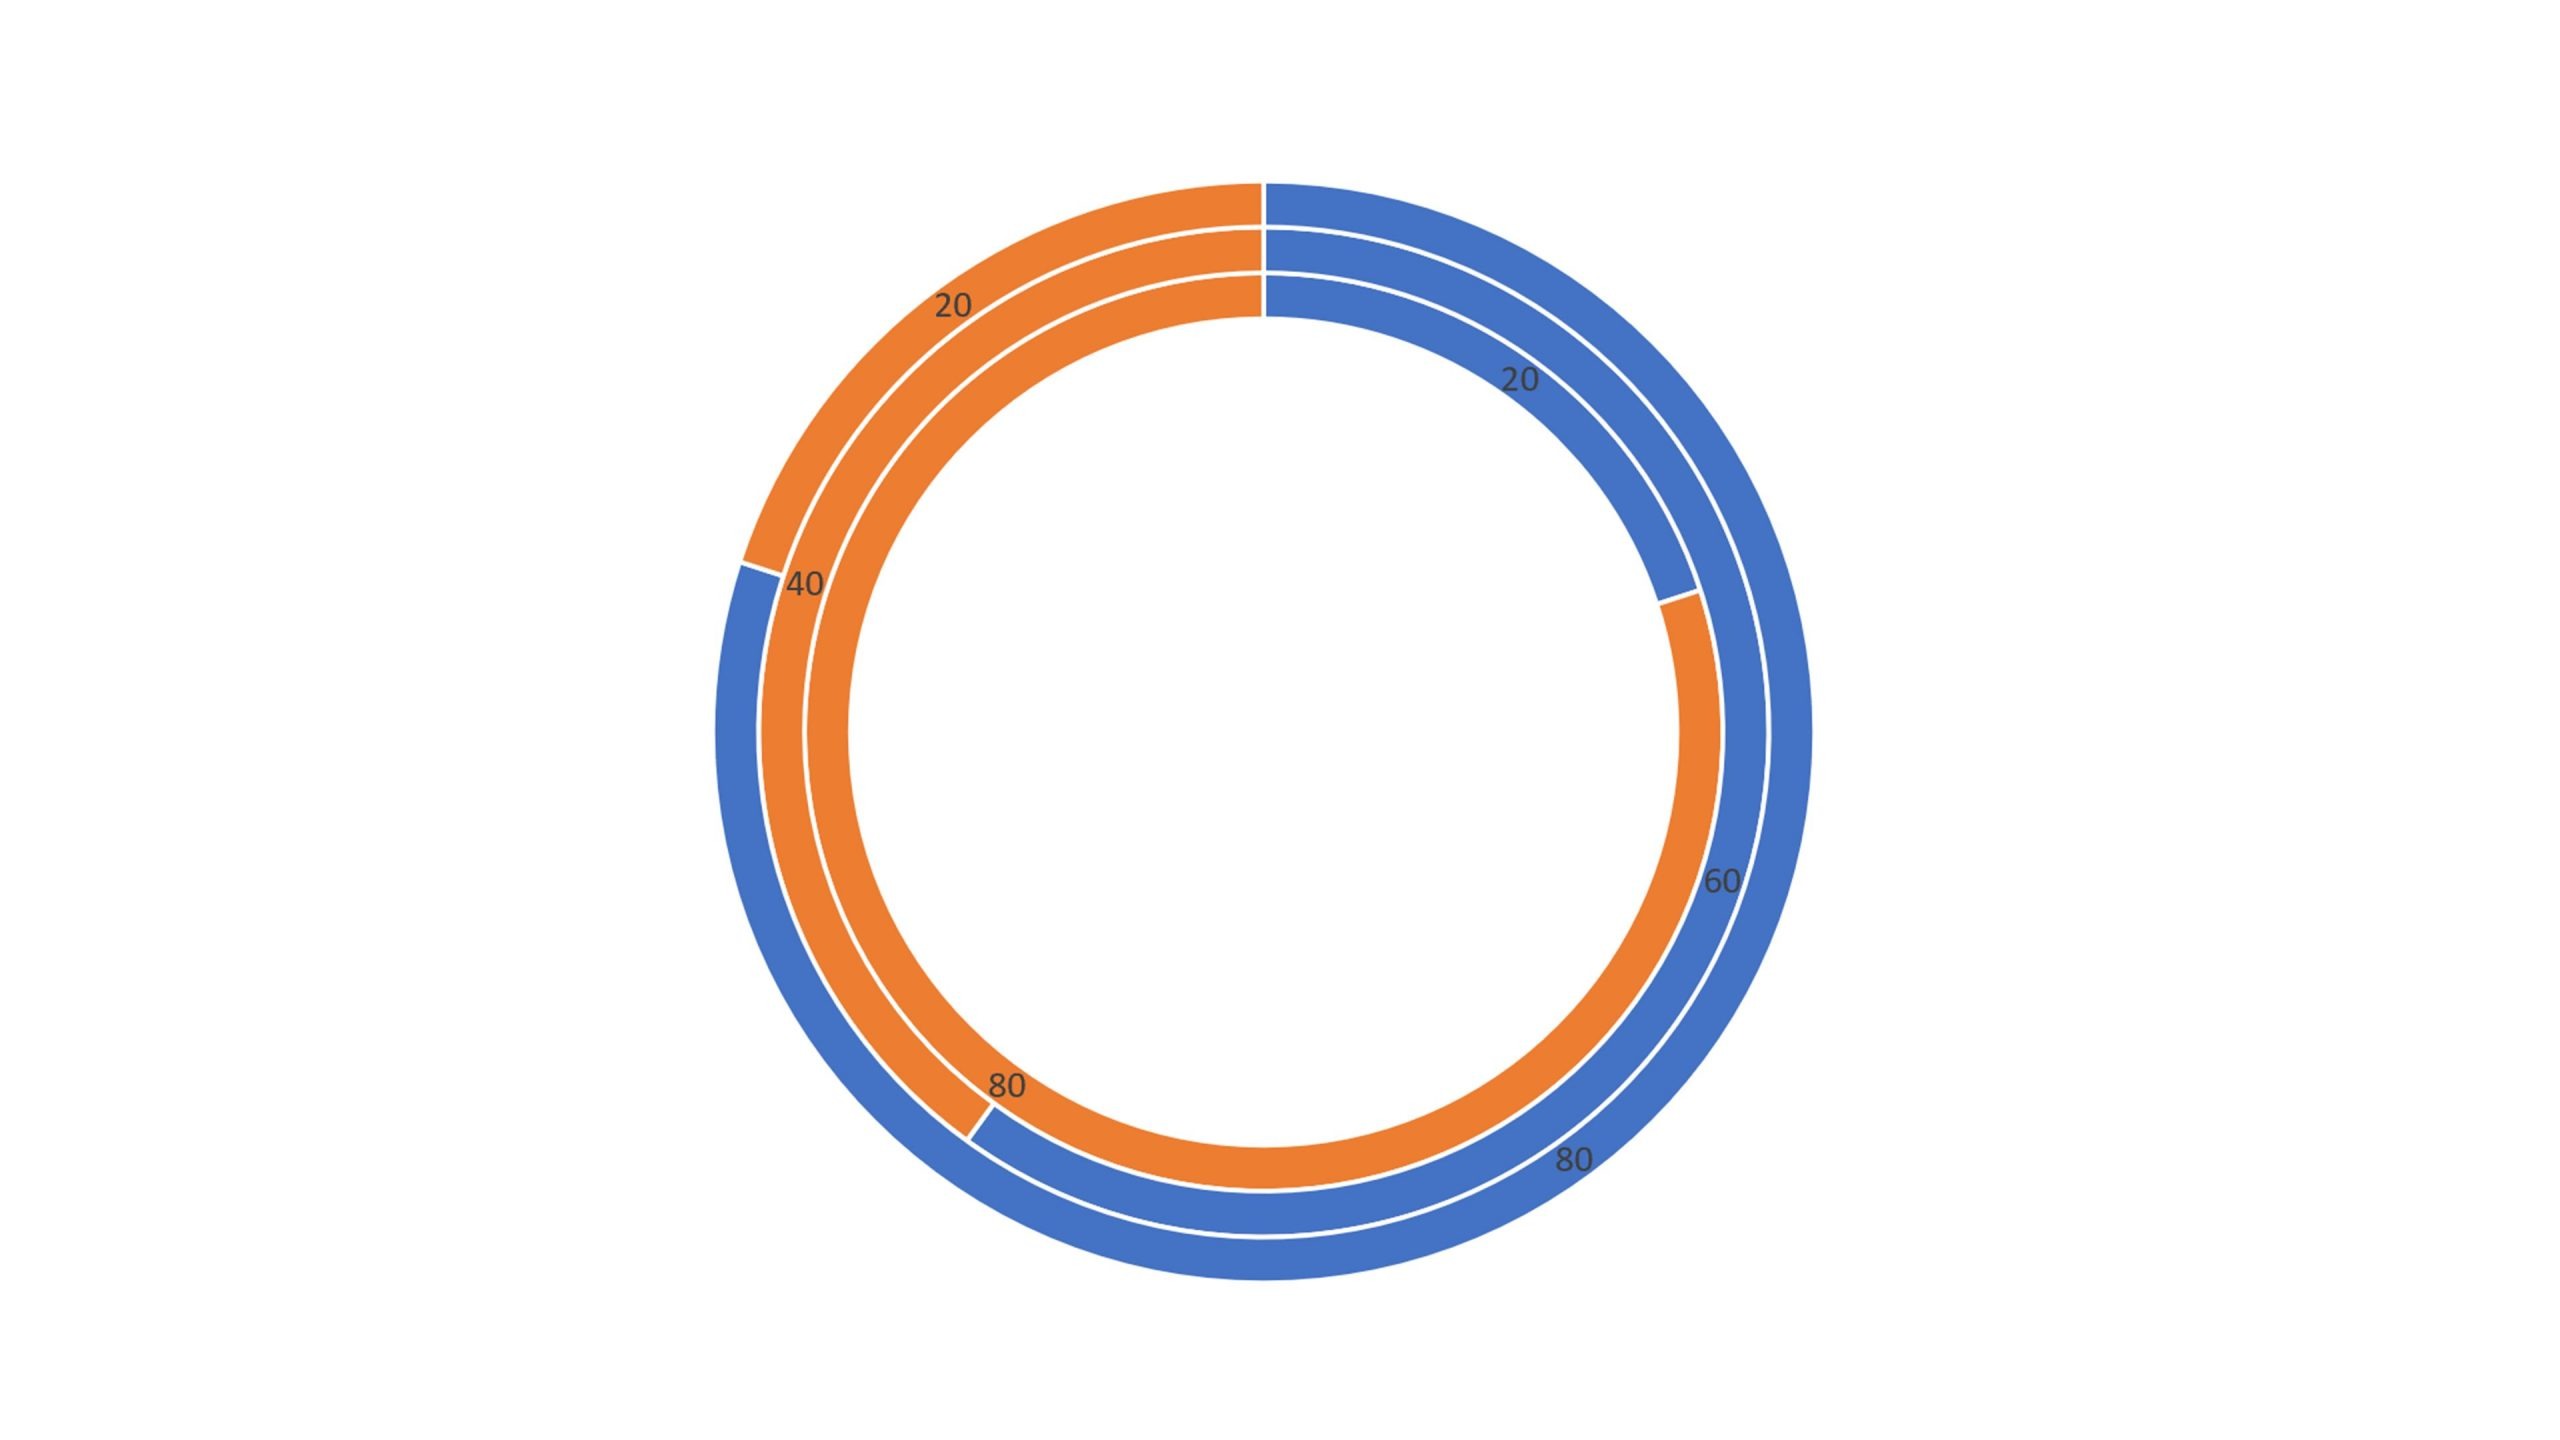 Screenshot of PowerPoint doughnut chart using data in body of article.